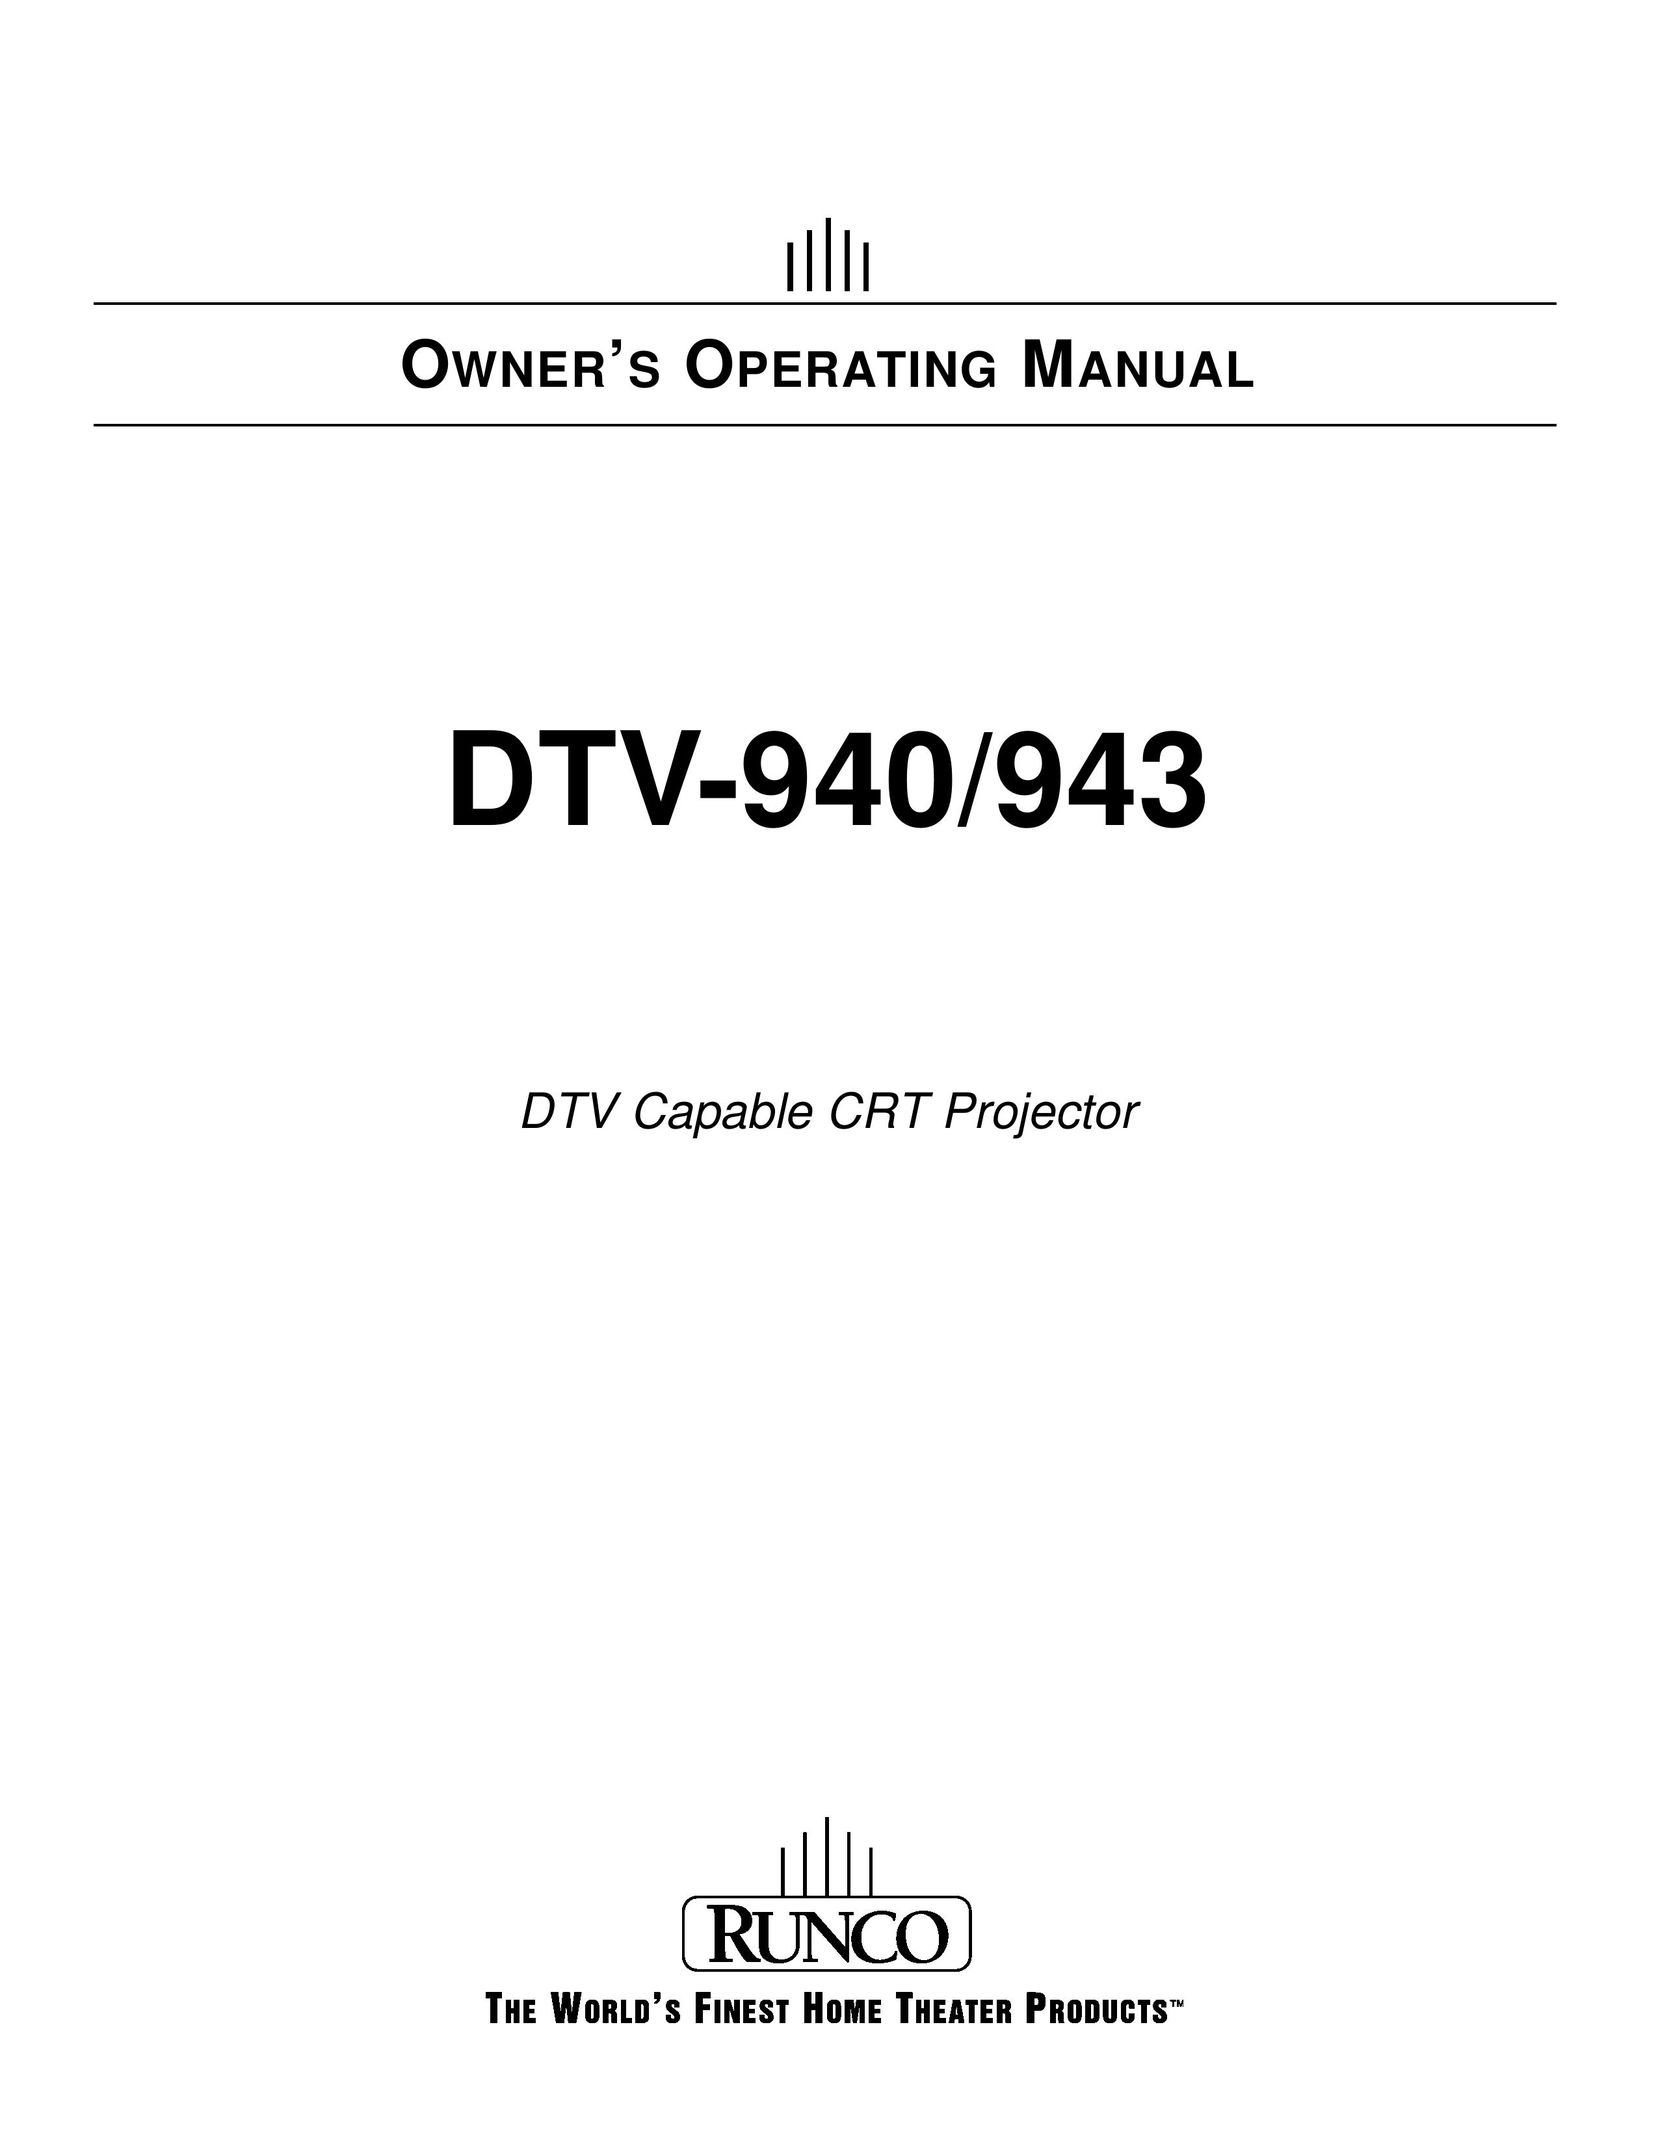 Runco DTV-940 CRT Television User Manual